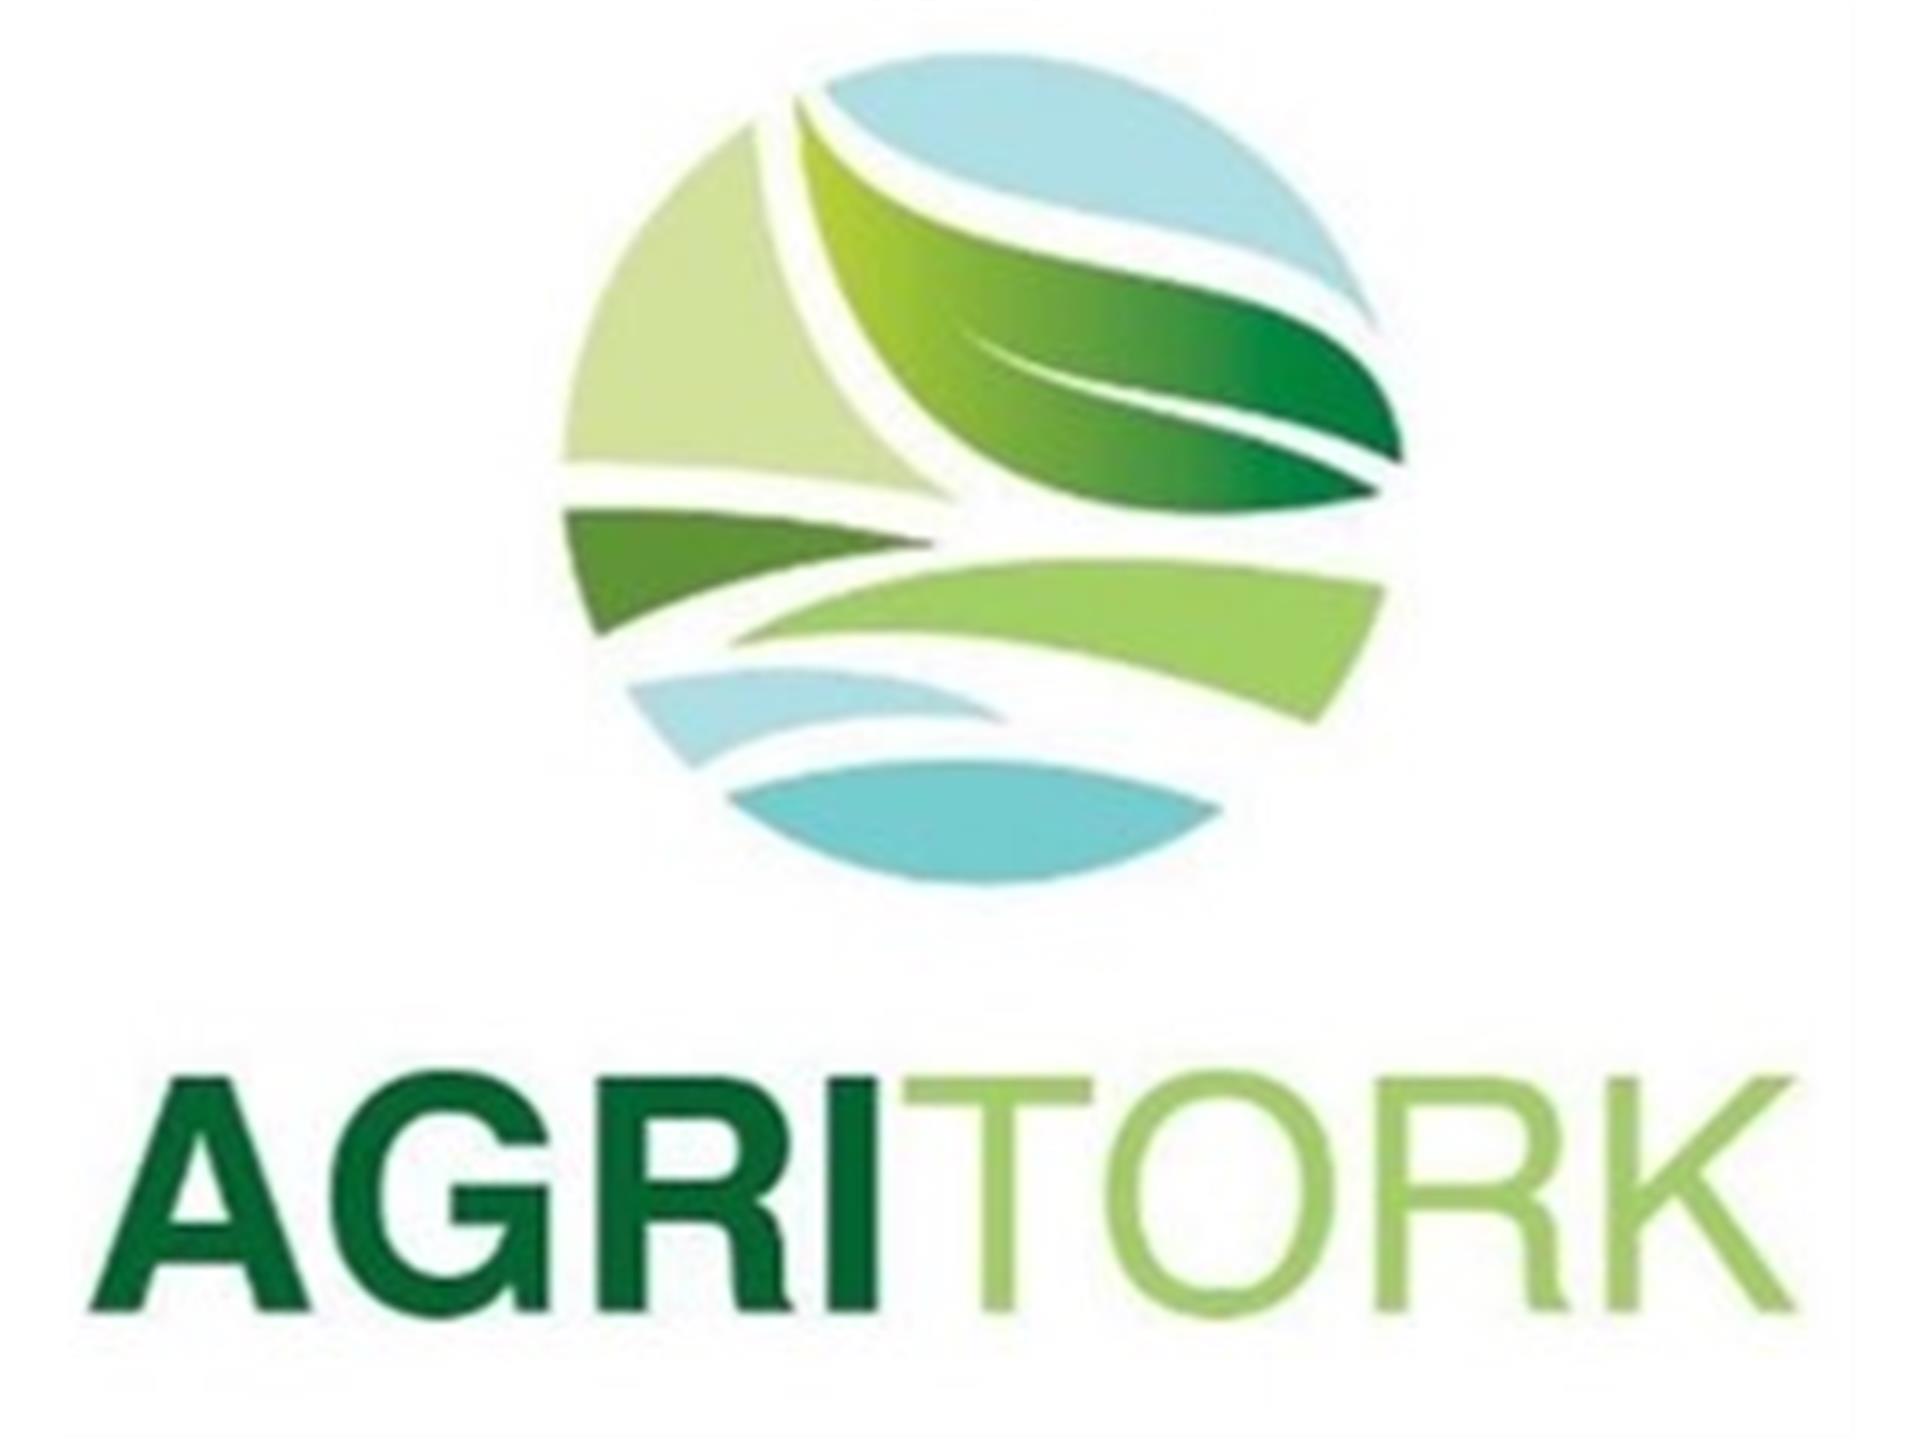 Agritork